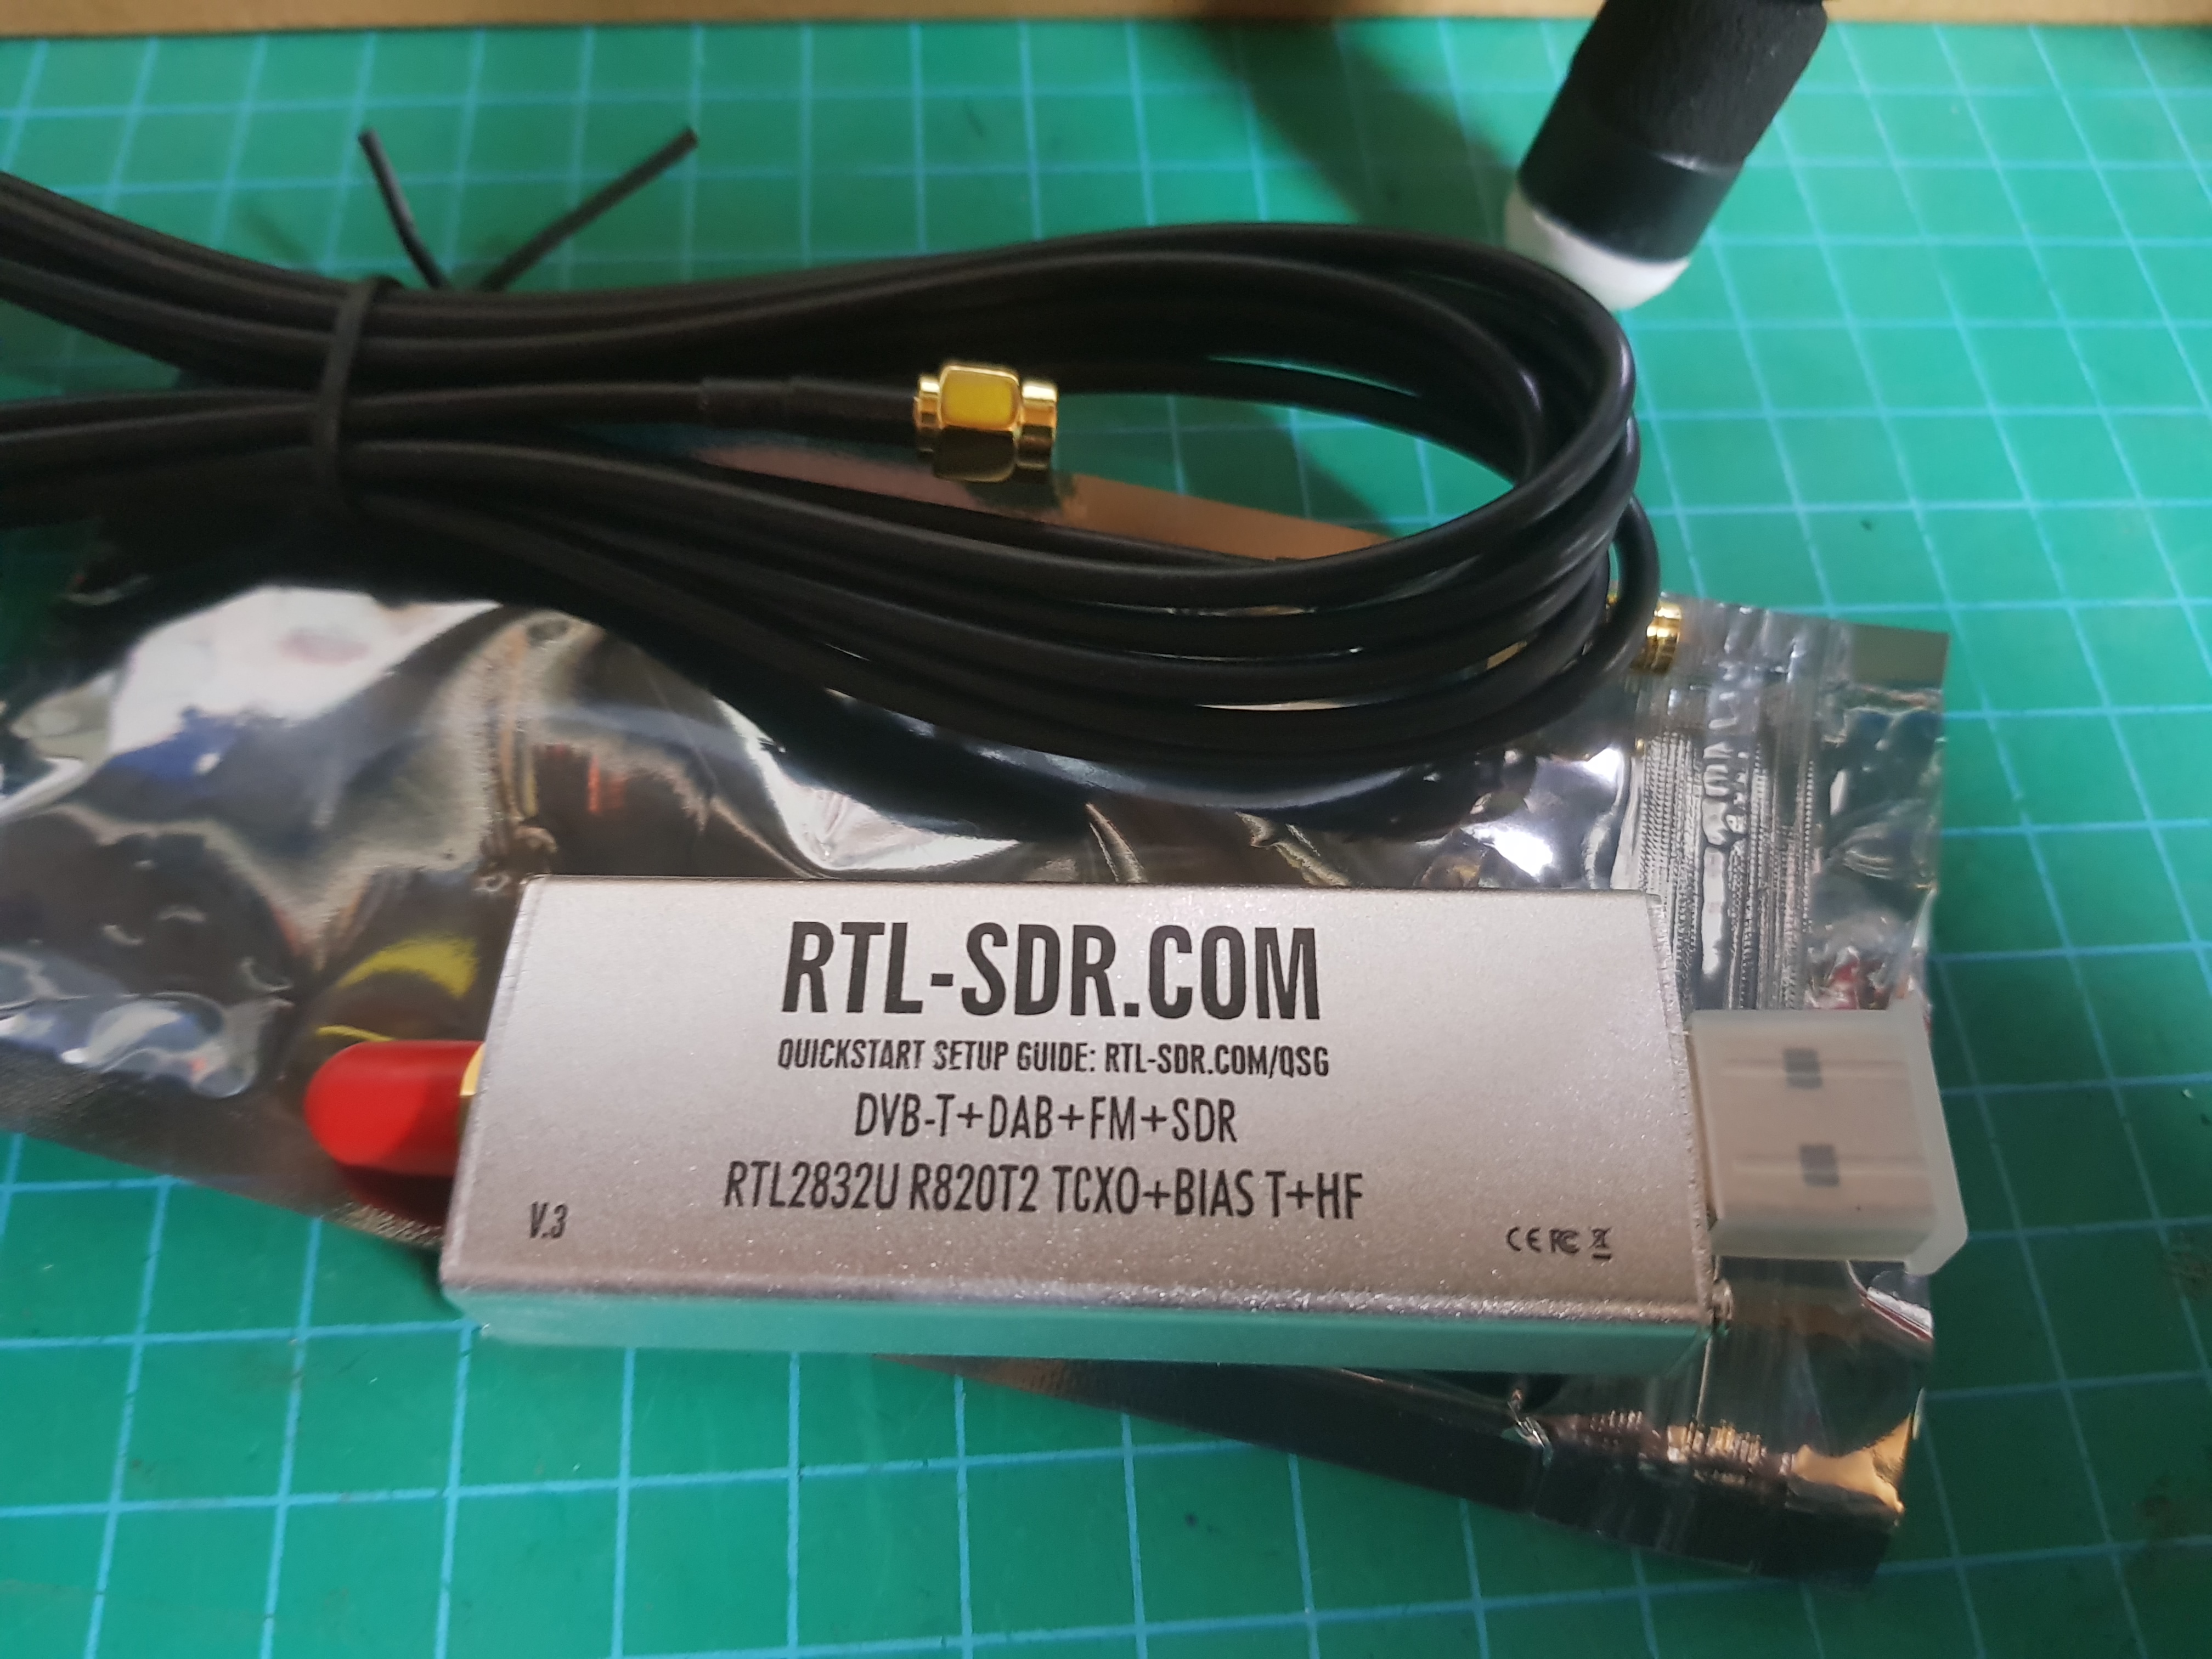 RTL-SDR BLOG V3 USB Dongle with Dipole Antenna Kit